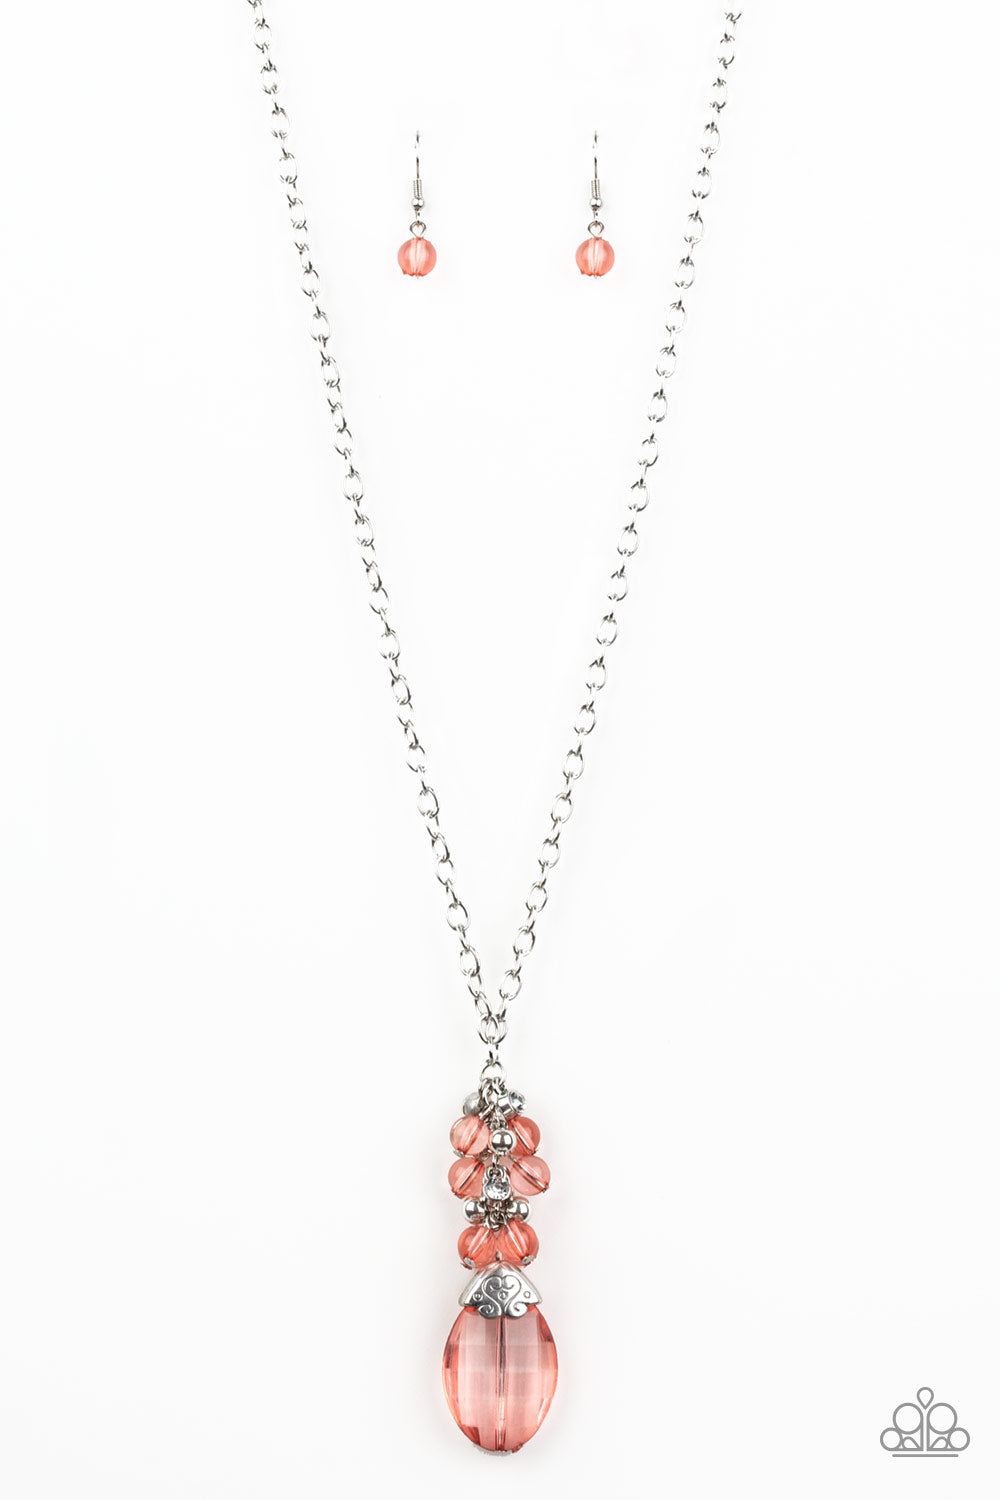 Crystal Cascade - Orange Necklace